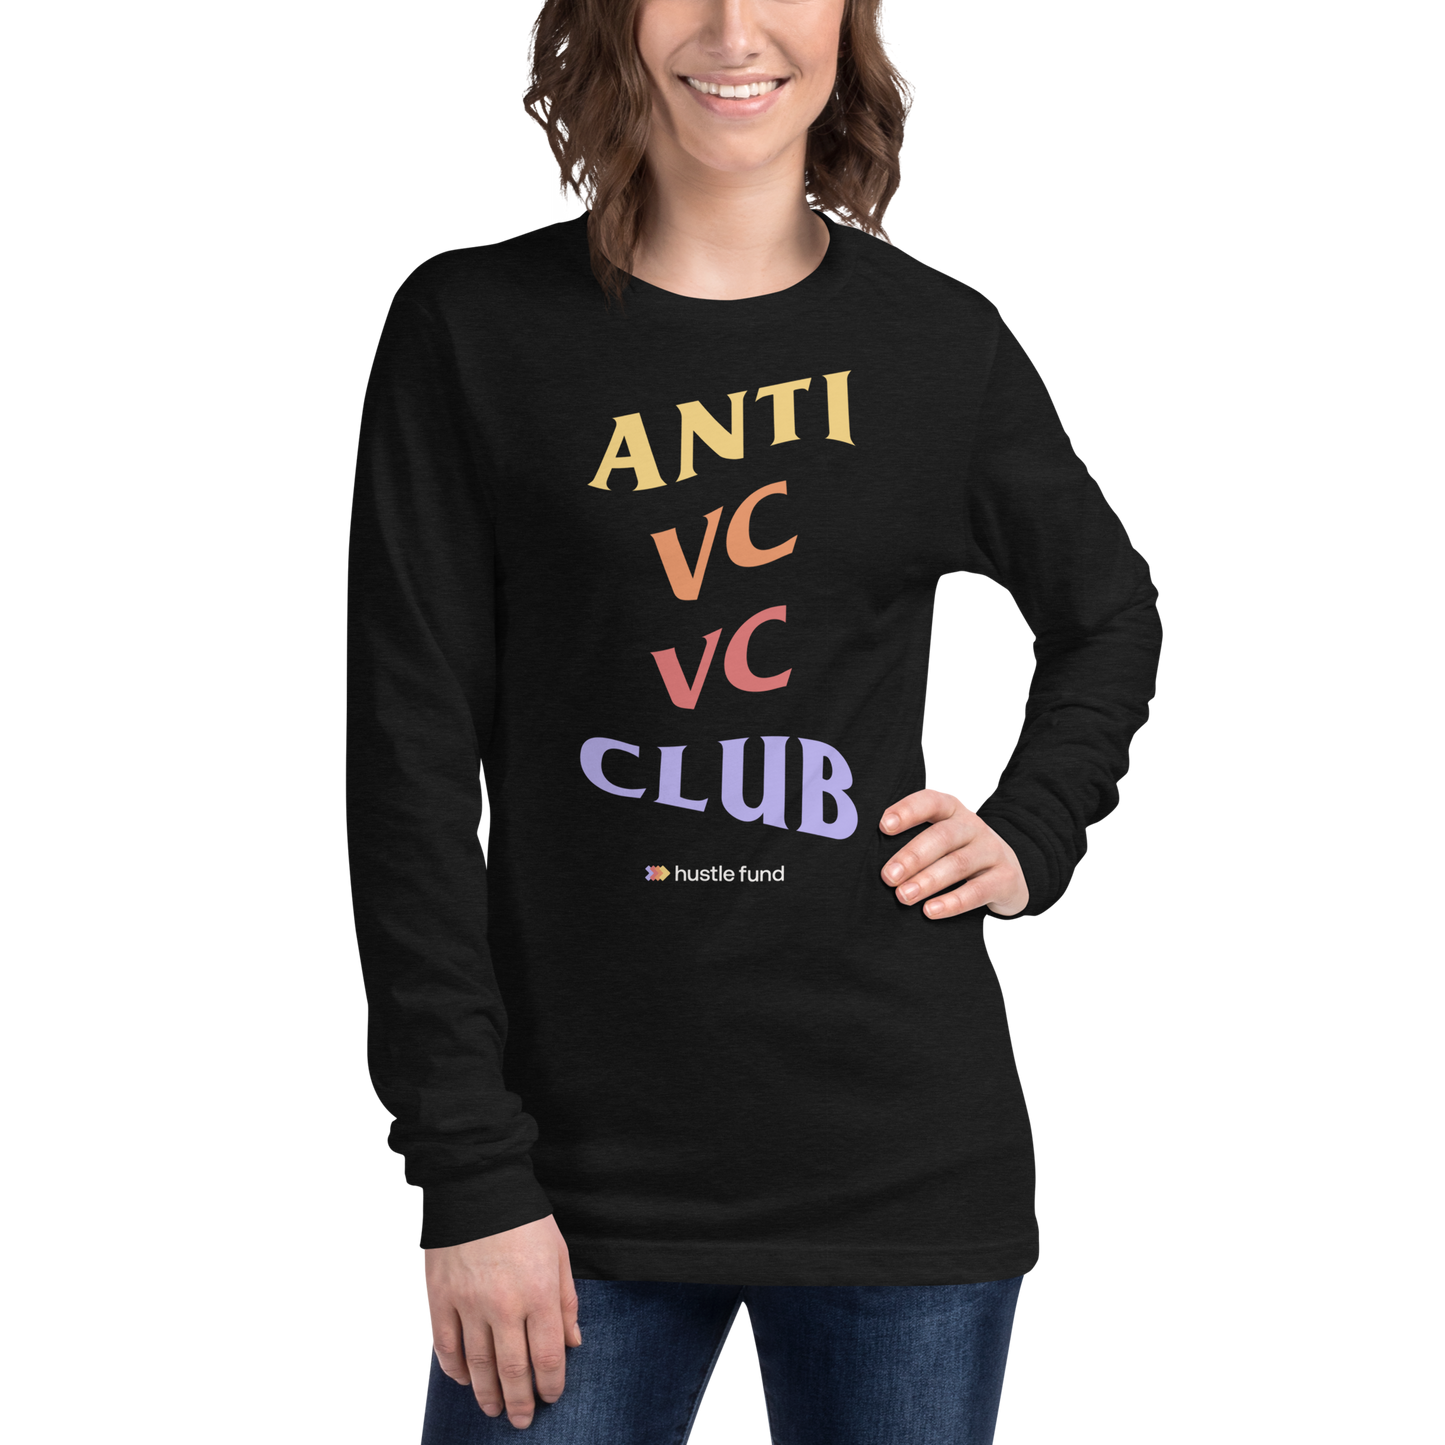 Anti VC VC Club Unisex Long Sleeve Tee